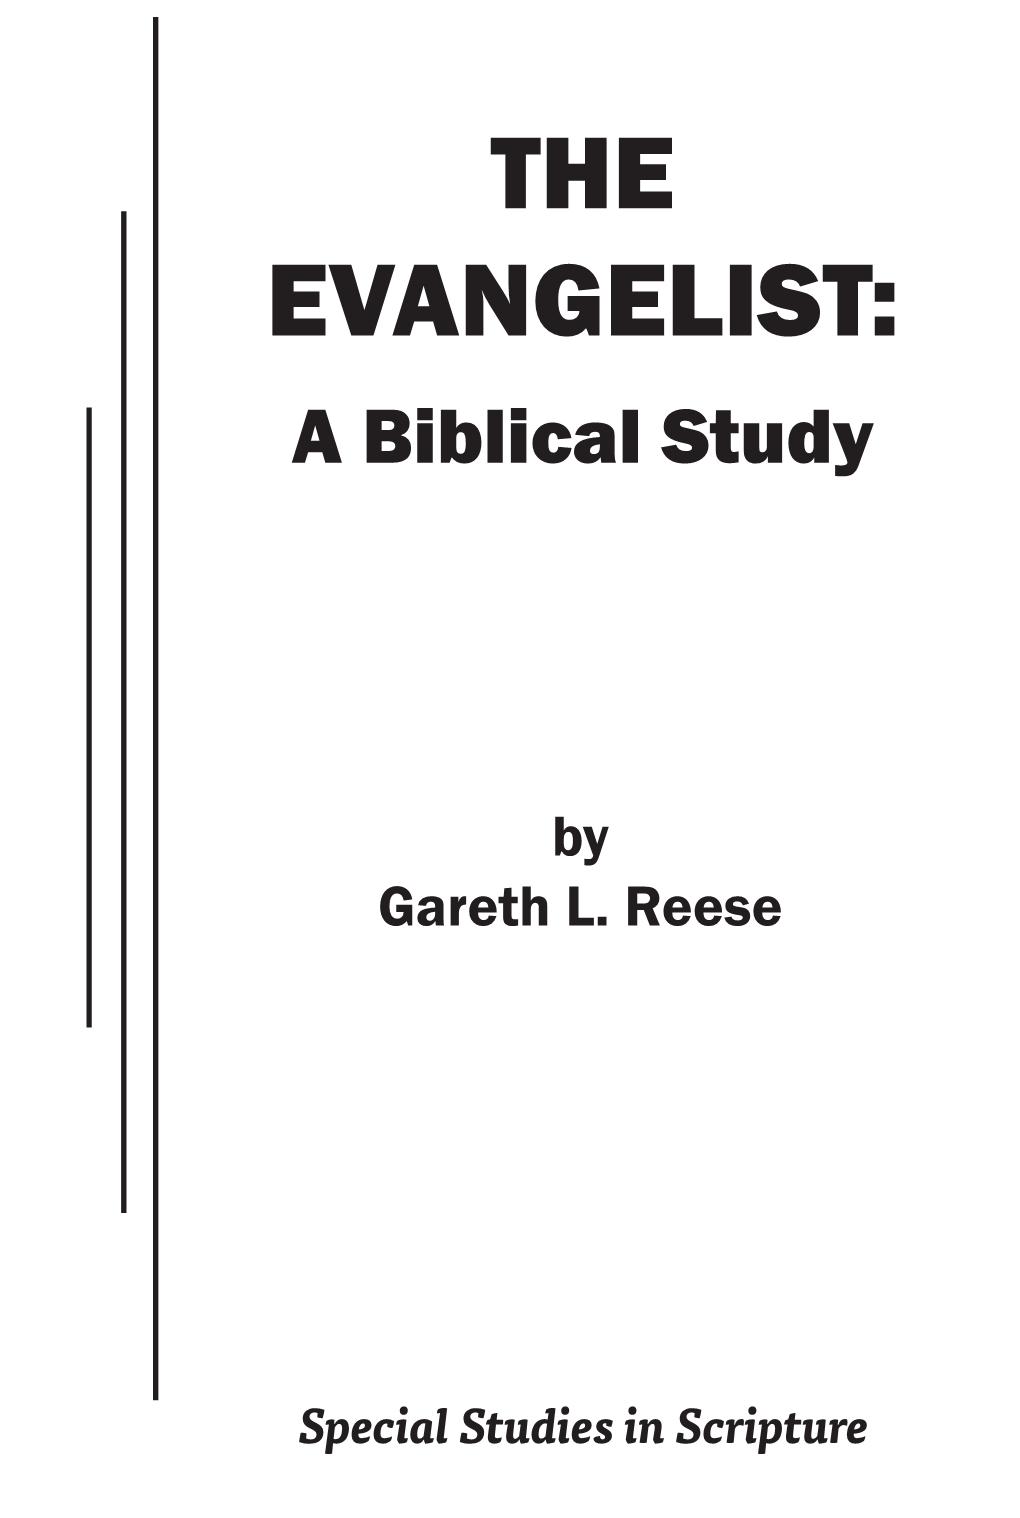 THE EVANGELIST: a Biblical Study